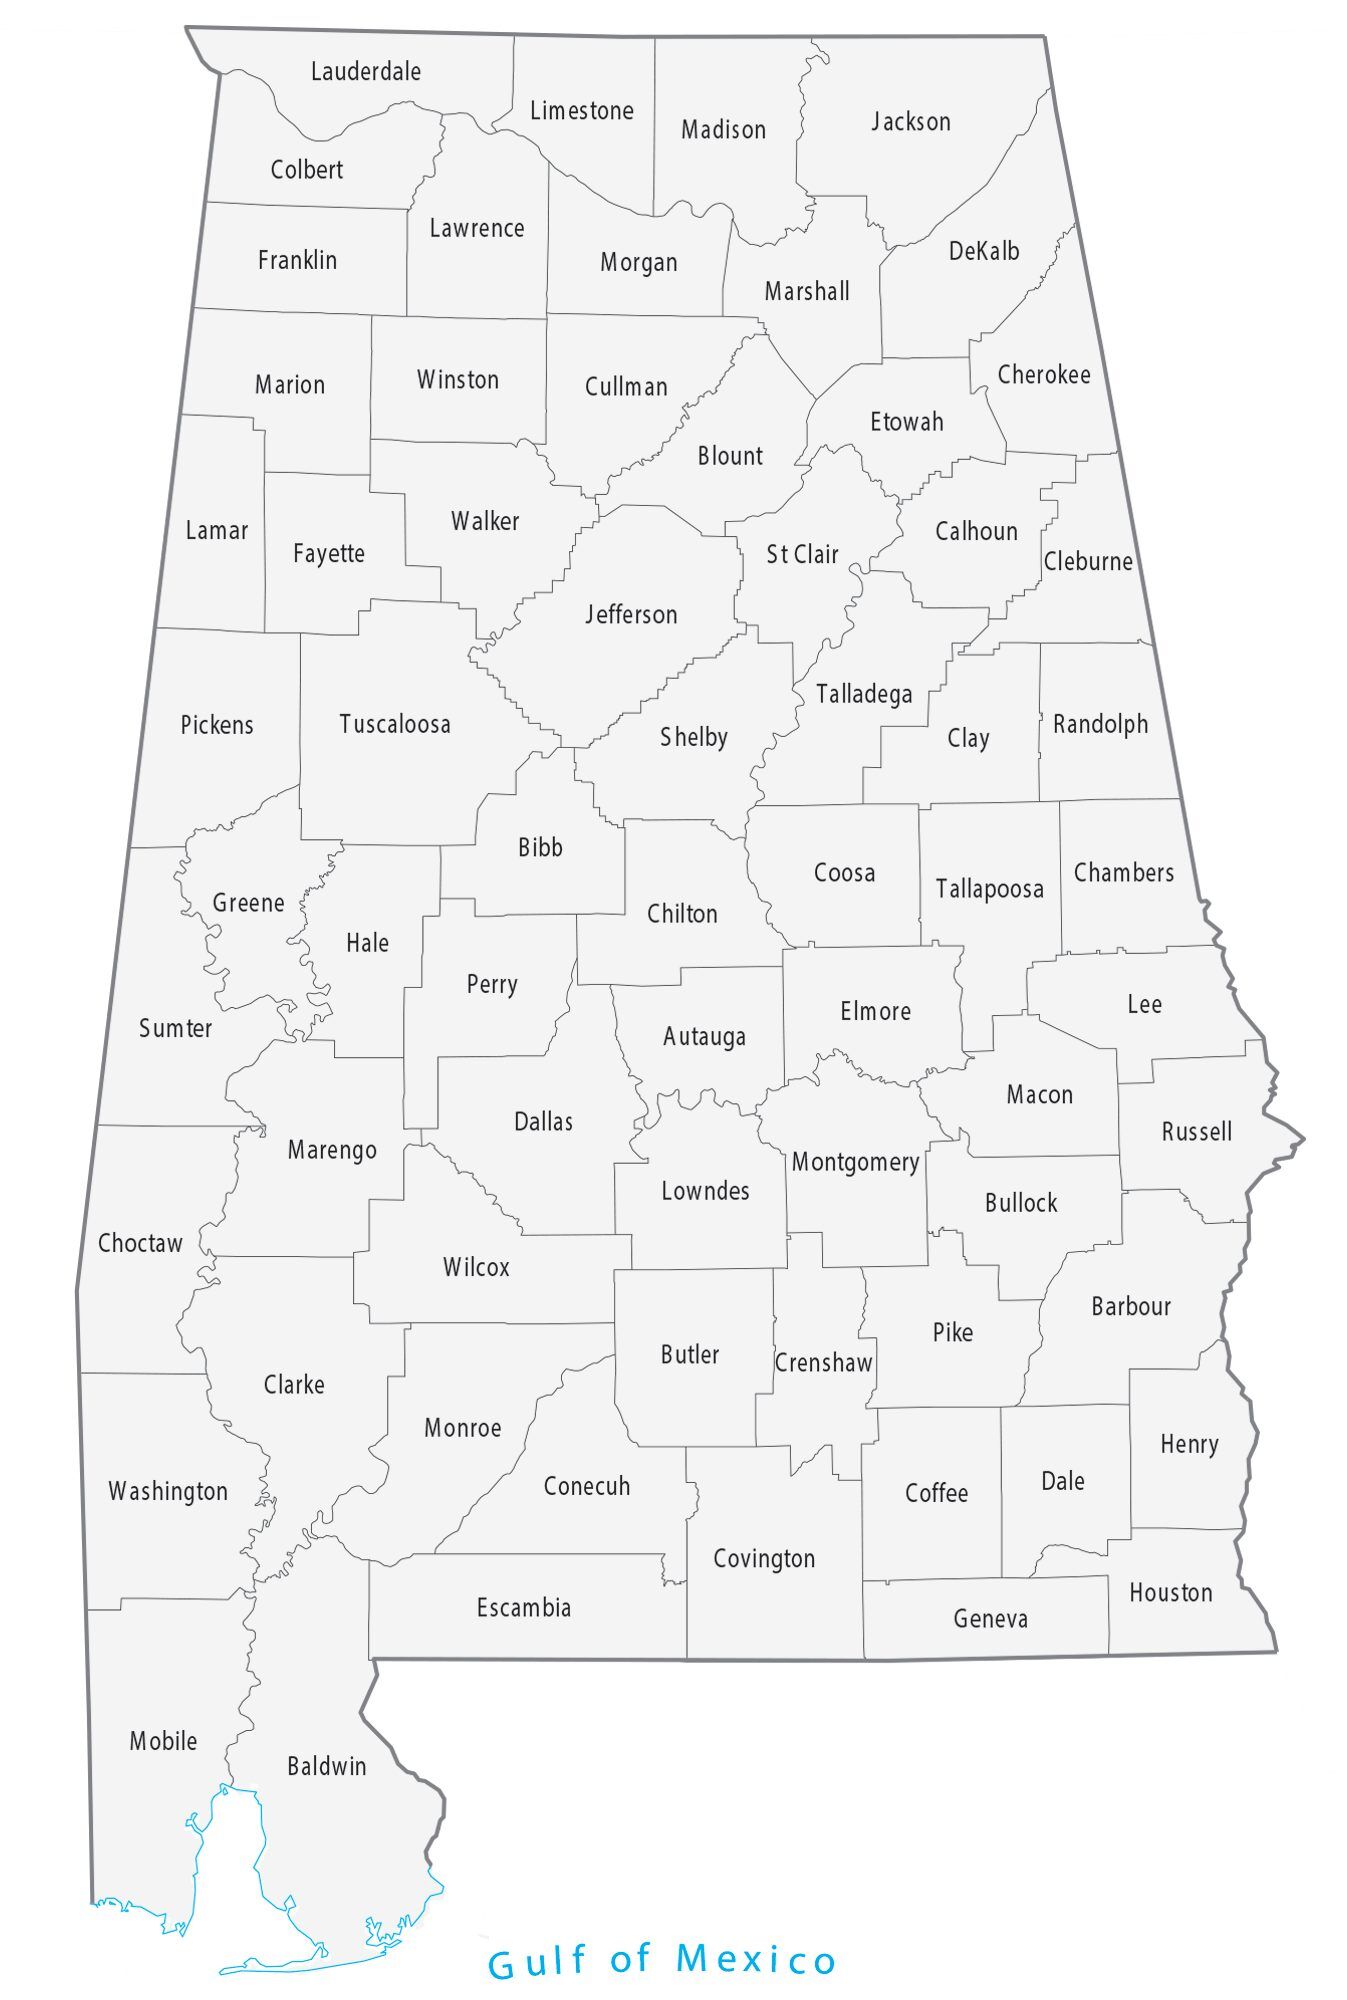 Alabama County Map - GIS Geography